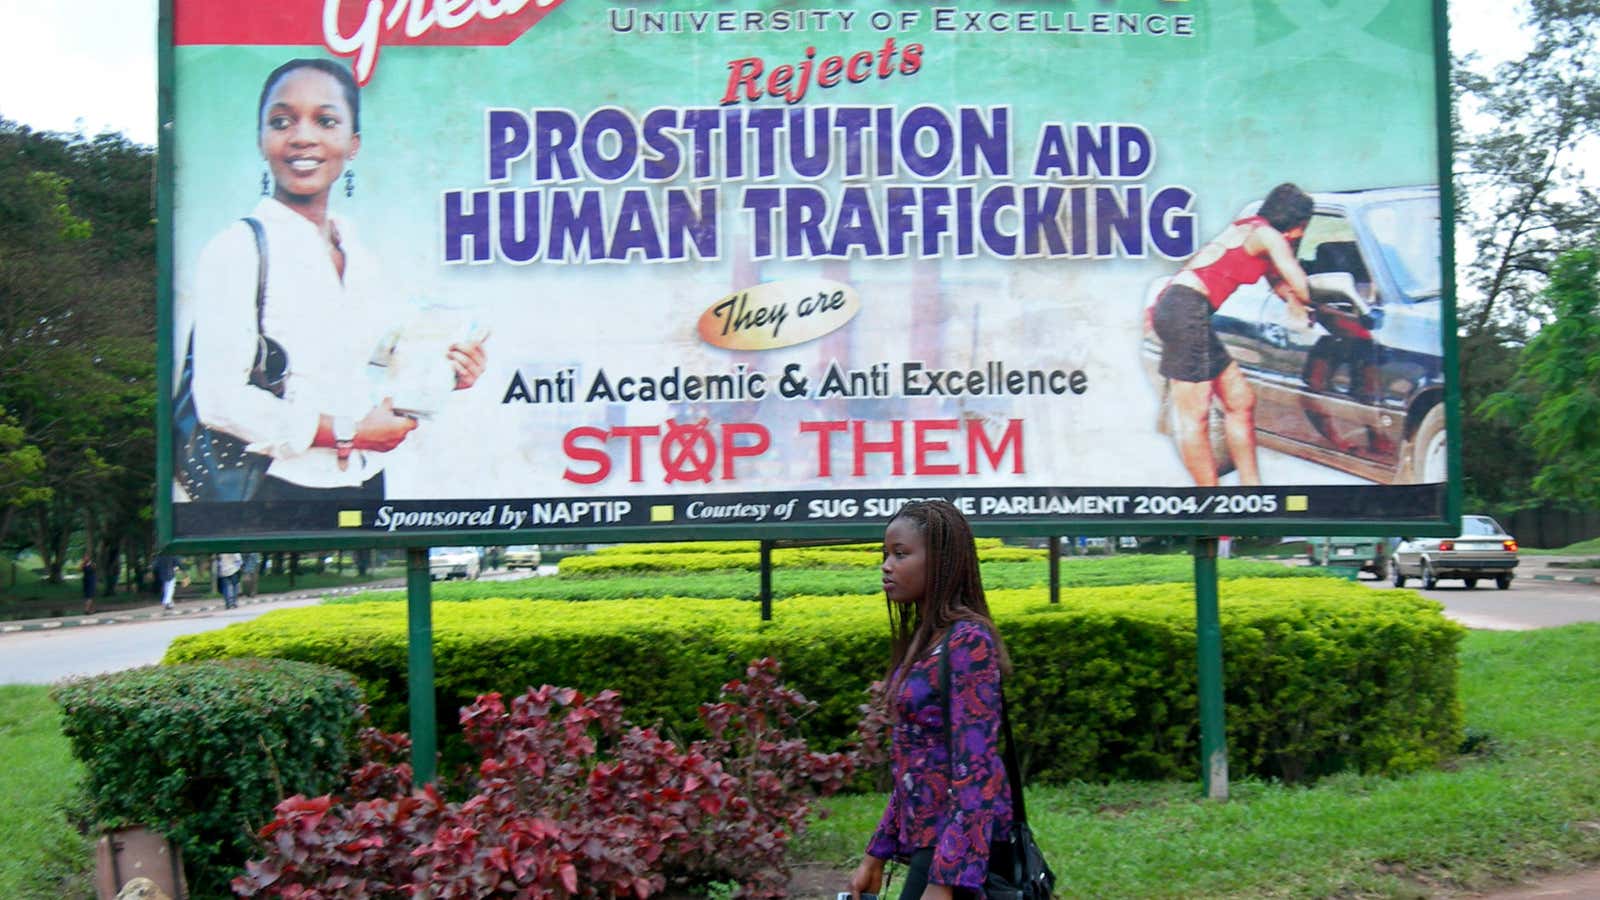 The University of Benin in Edo state has sponsored anti-trafficking campaigns.